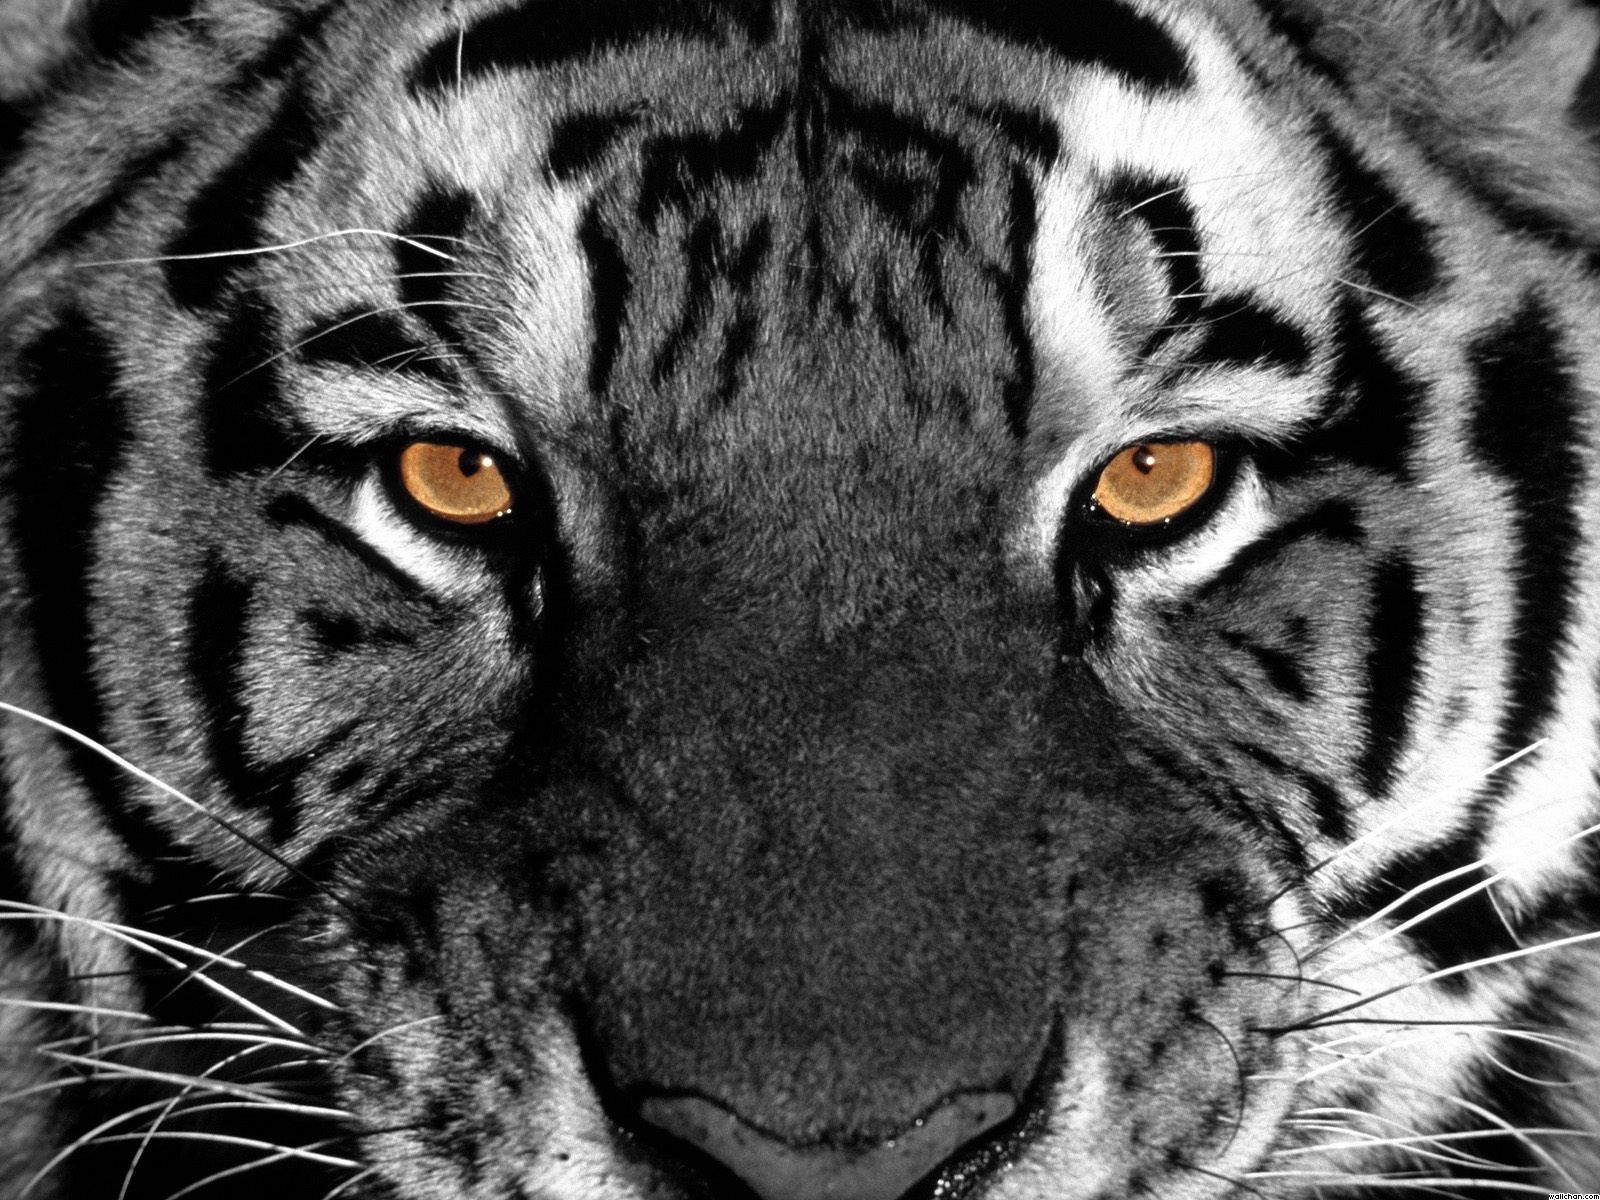 40 Gambar Hd Wallpapers Black and White Tiger terbaru 2020